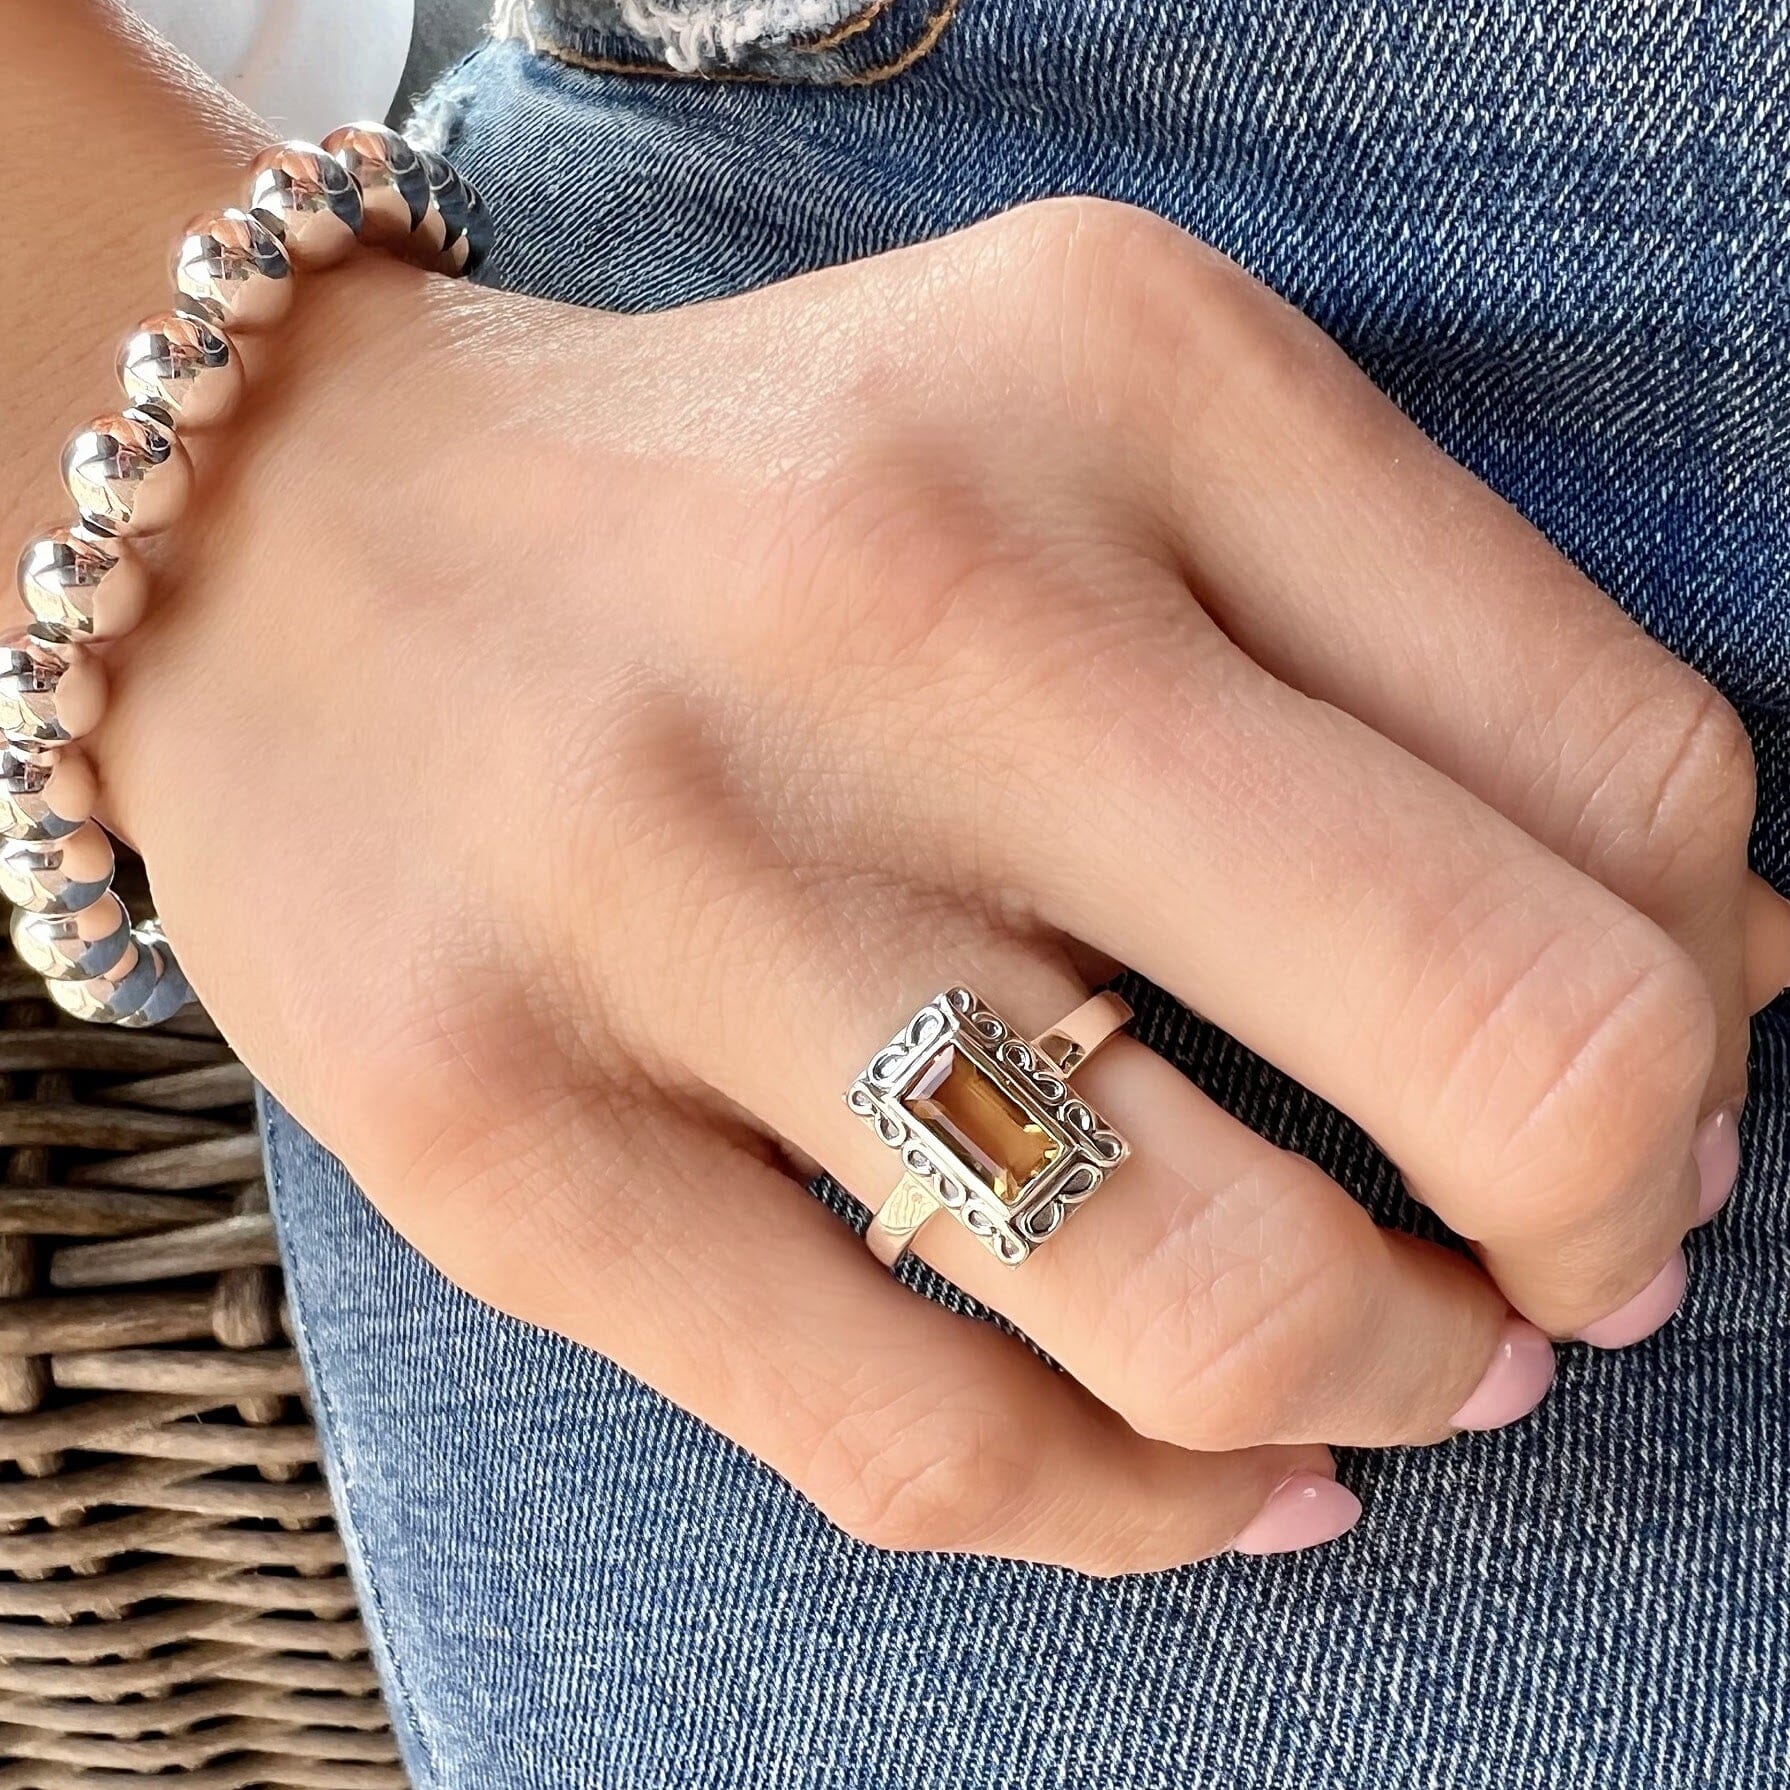 Tuscon Sun Ring worn with Classic Bead bracelet